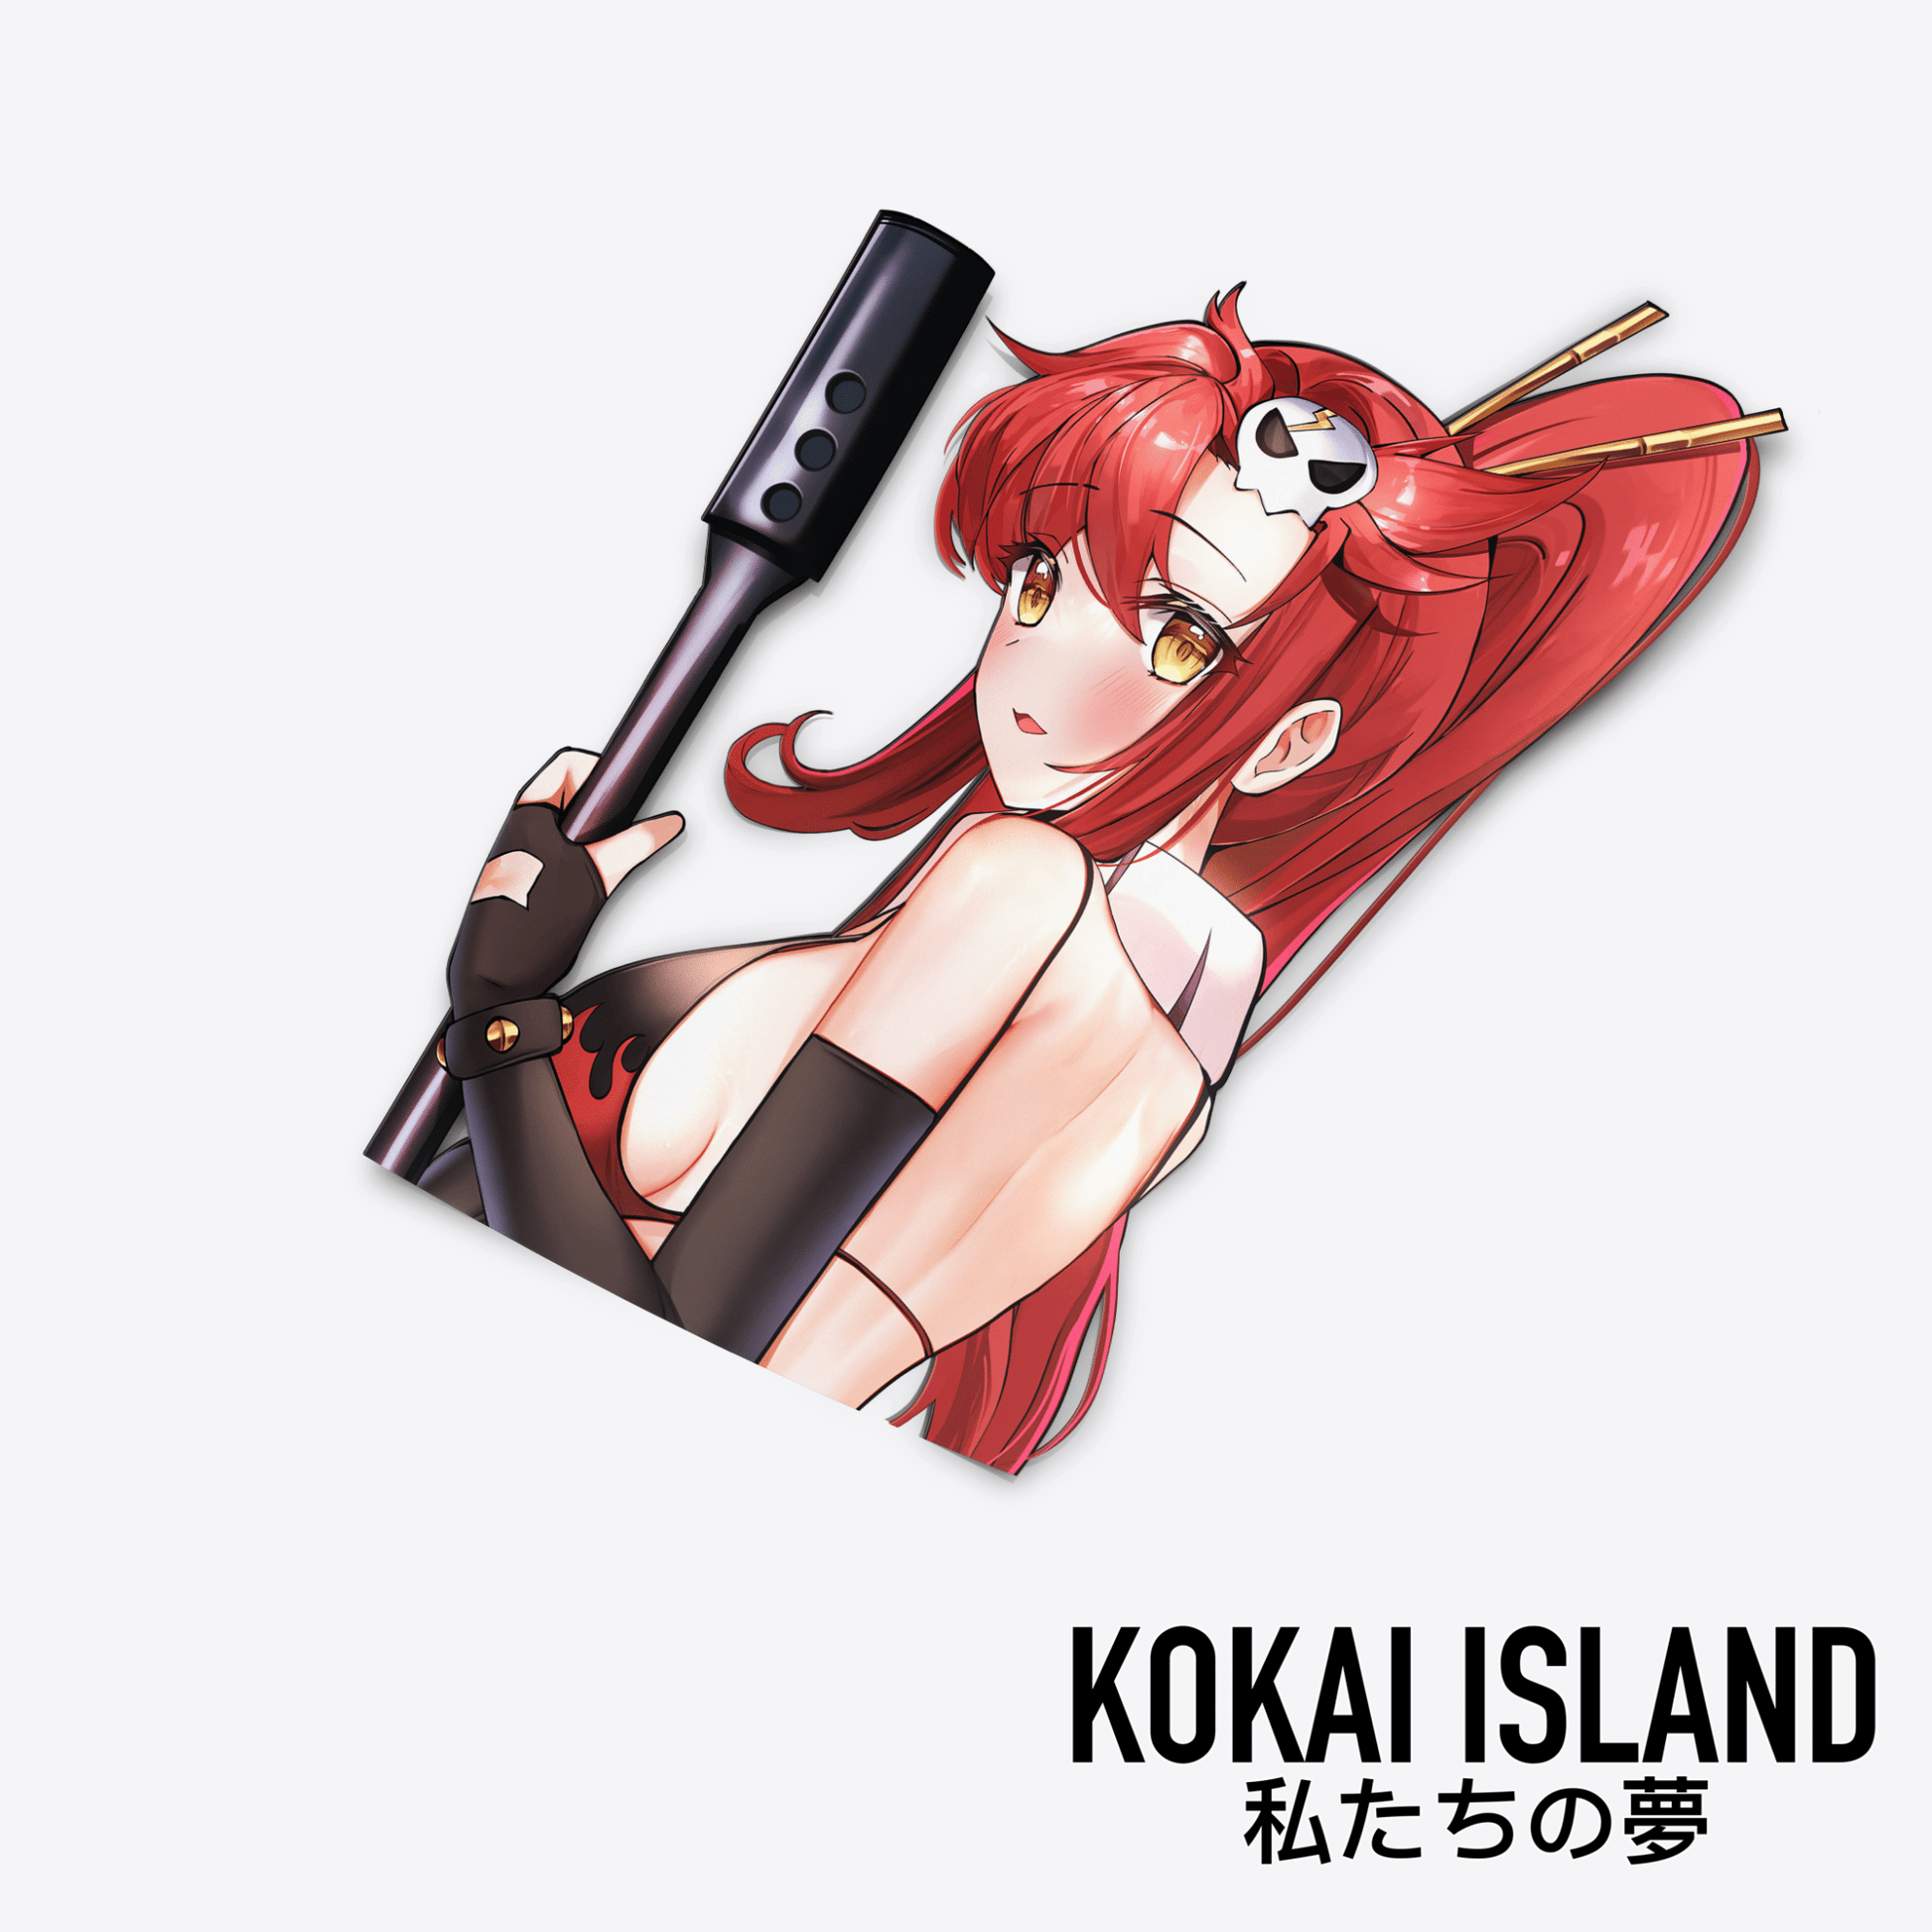 Yoko DecalDecalKokai Island